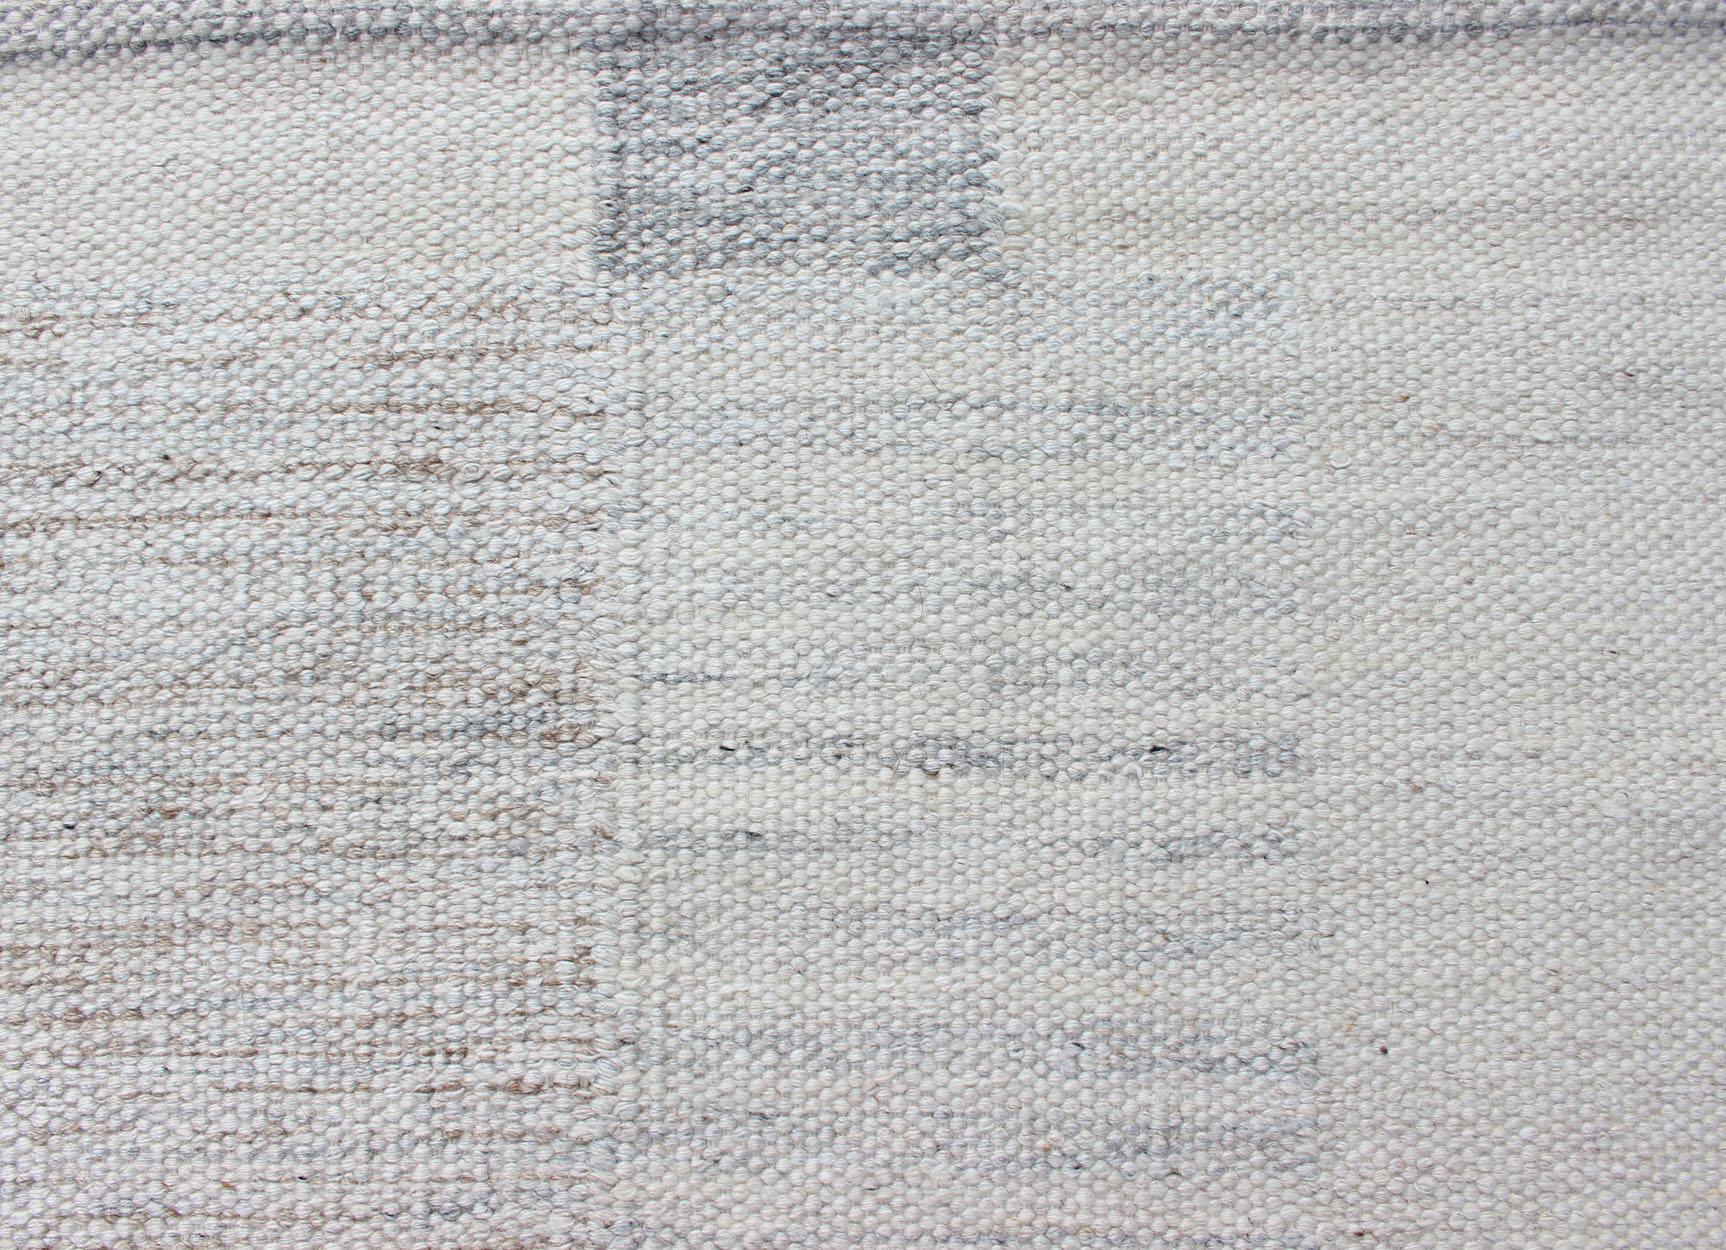 Modern Scandinavian Flat-Weave Rug Design in Gray, beige, Creams & White Tones For Sale 3